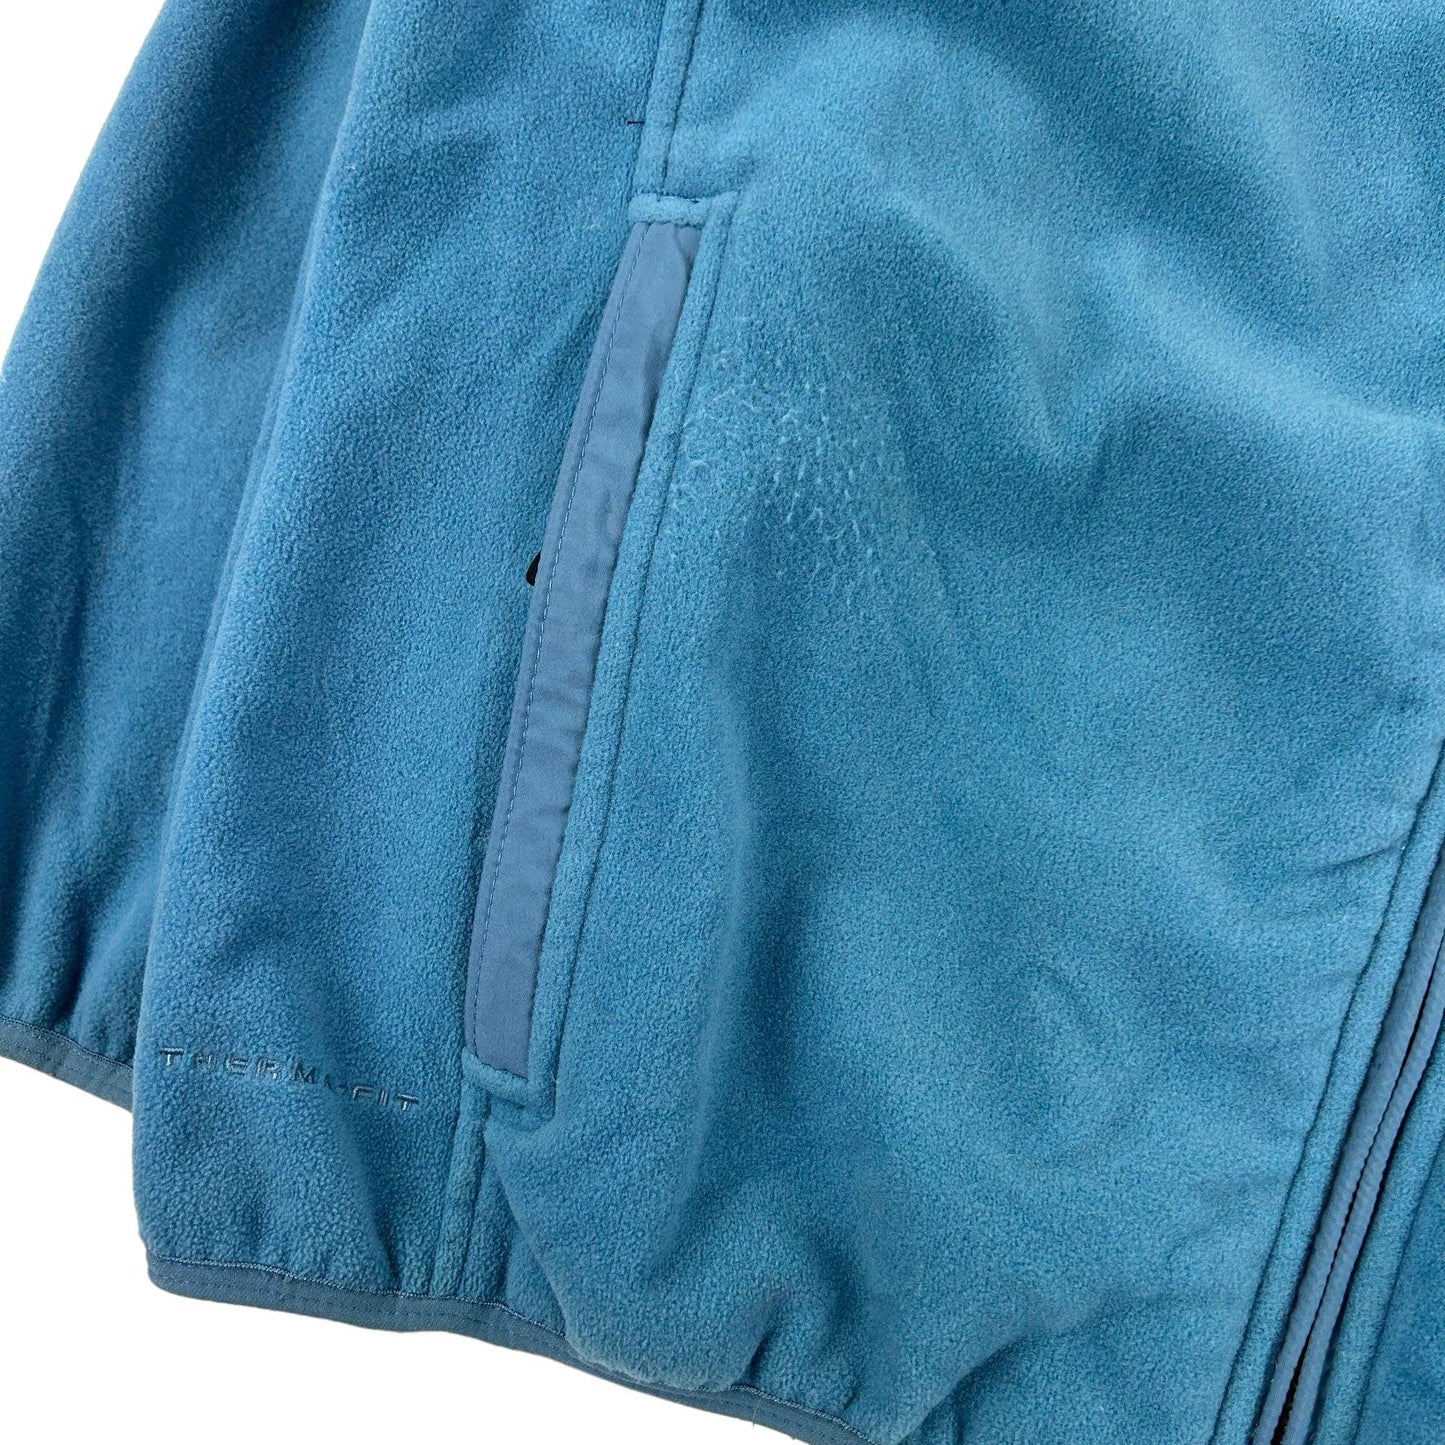 Vintage Nike ACG Fleece Jacket Size XL - Known Source